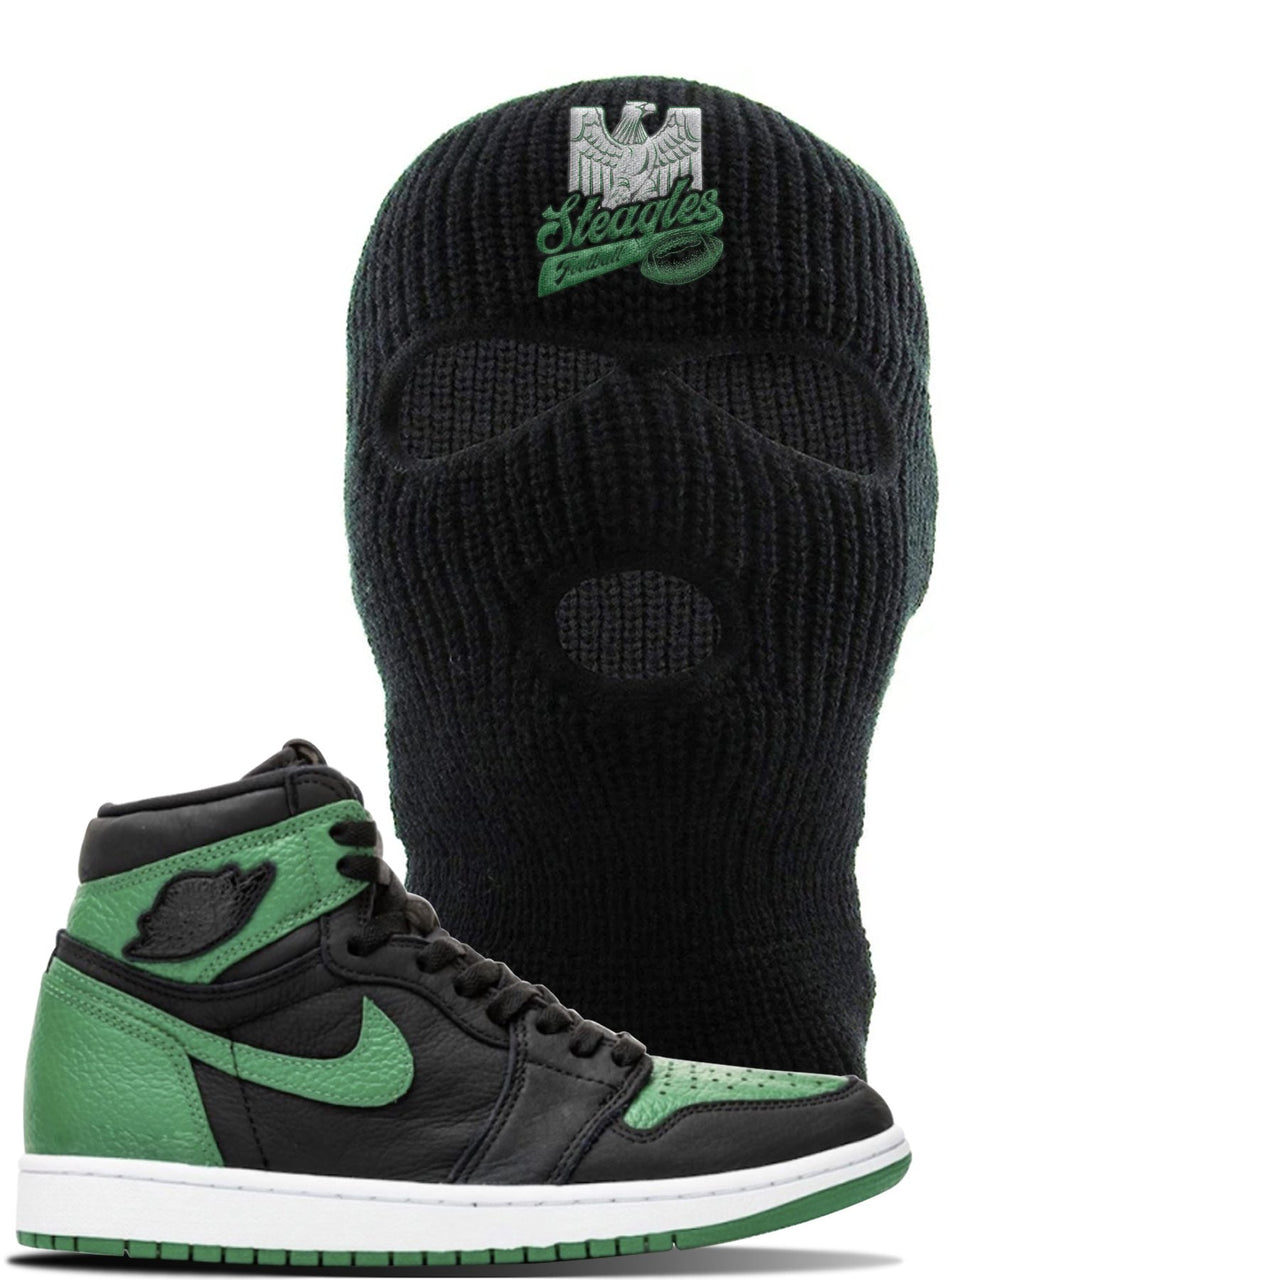 Jordan 1 Retro High OG Pine Green Gym Sneaker Black Ski Mask | Hat to match Air Jordan 1 Retro High OG Pine Green Gym Shoes | Steagles